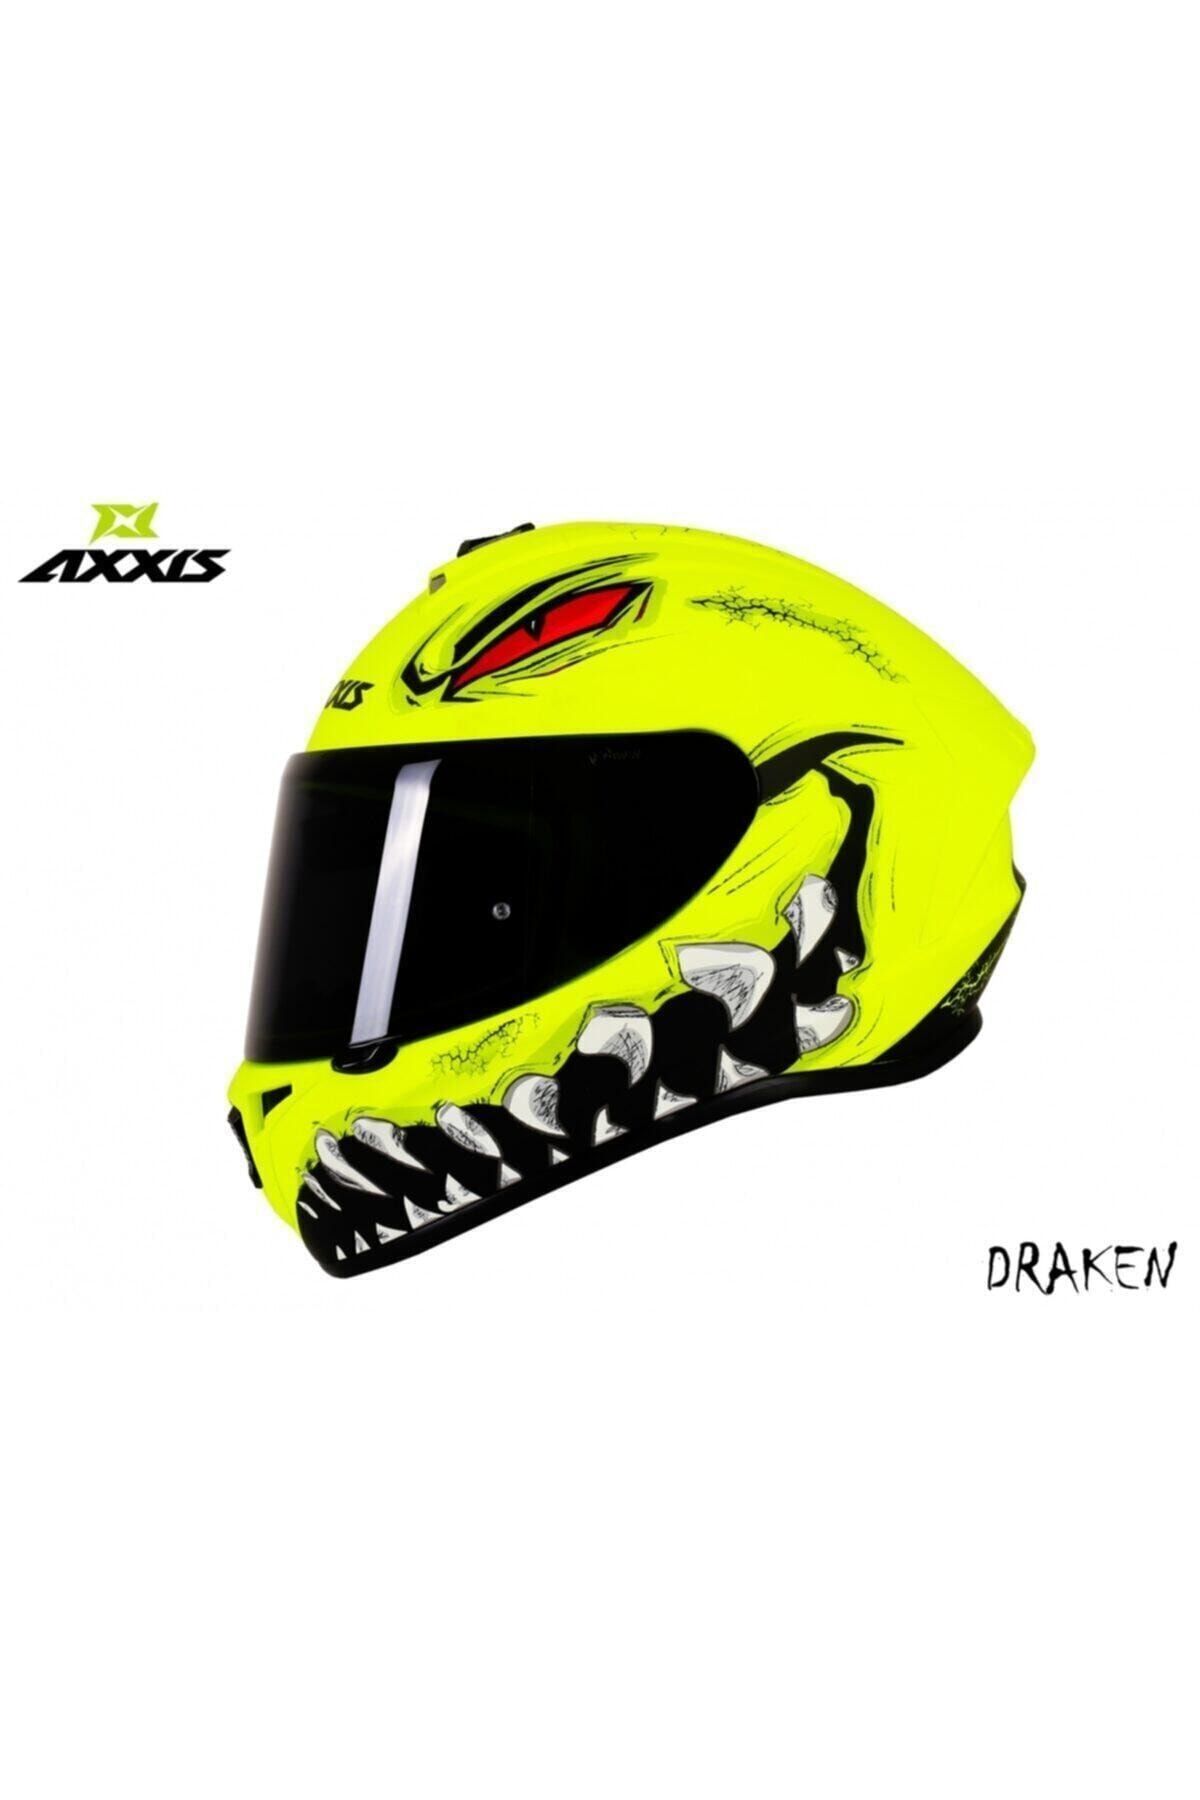 Axxis Draken Forza Motosiklet Kask Mat Fluo Sarı